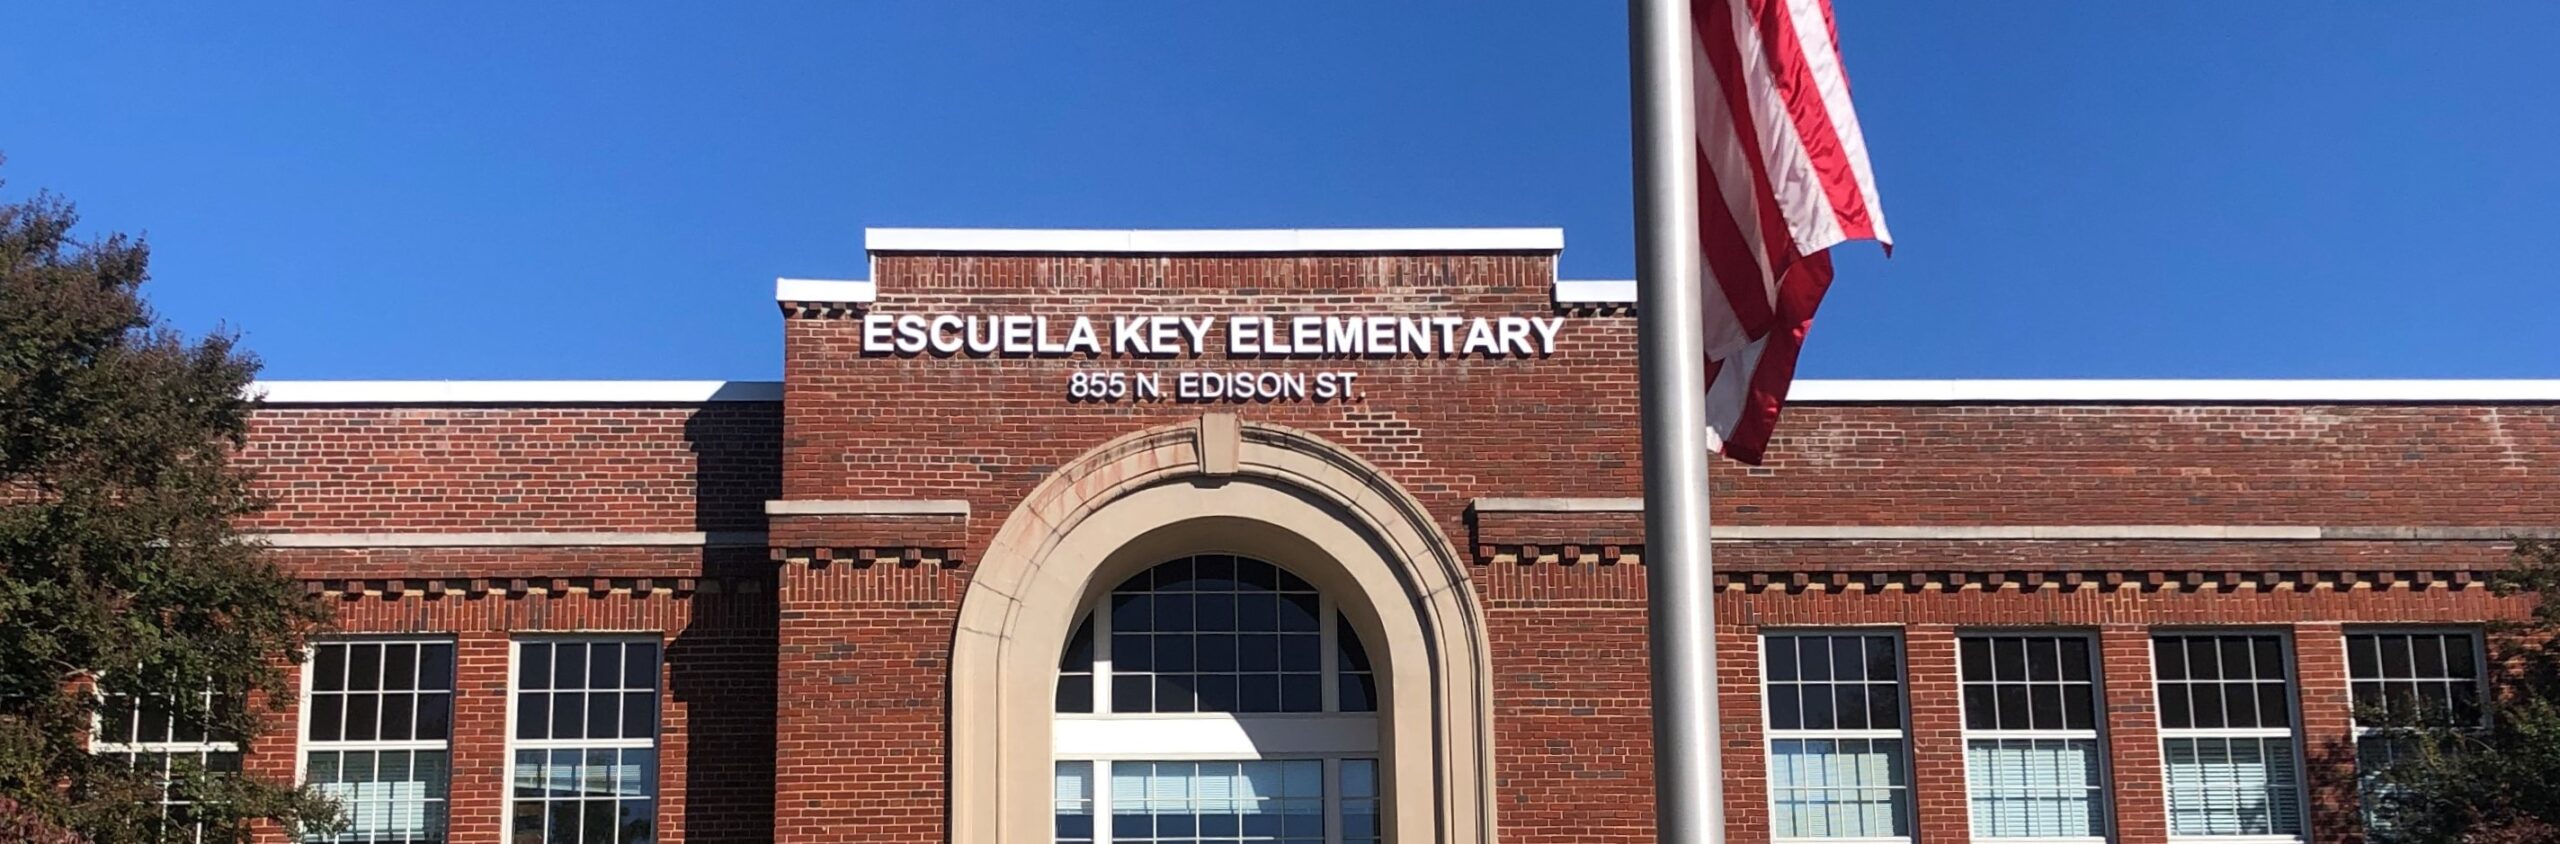 Escuela Key Elementary